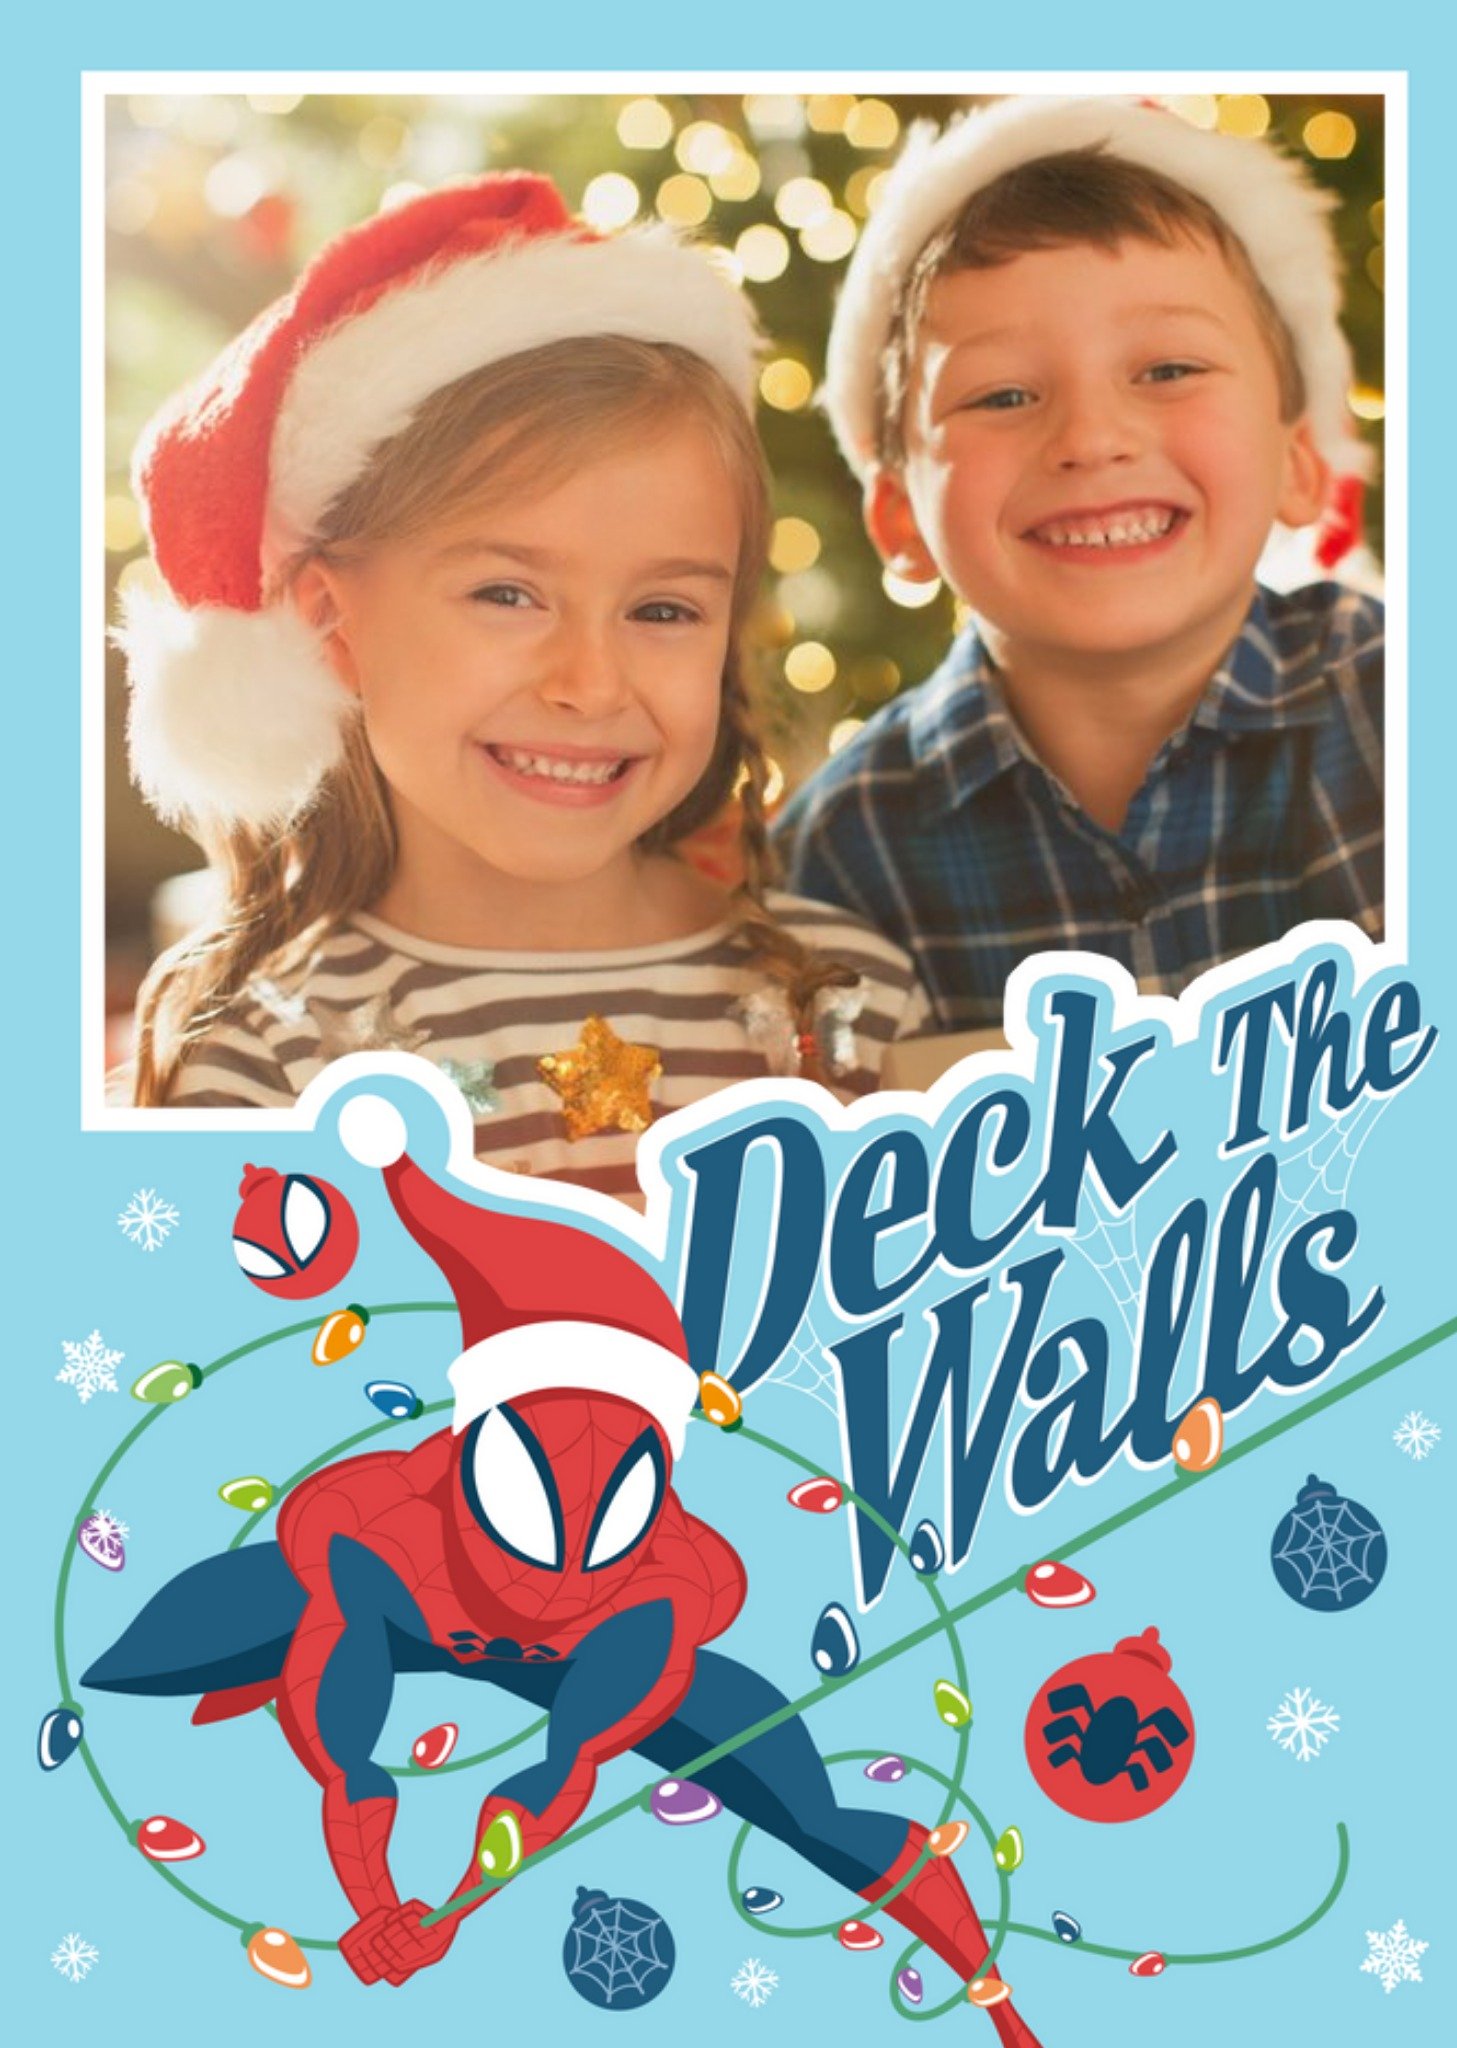 Disney Marvel Comics Spider-Man Deck The Walls Photo Upload Christmas Card Ecard